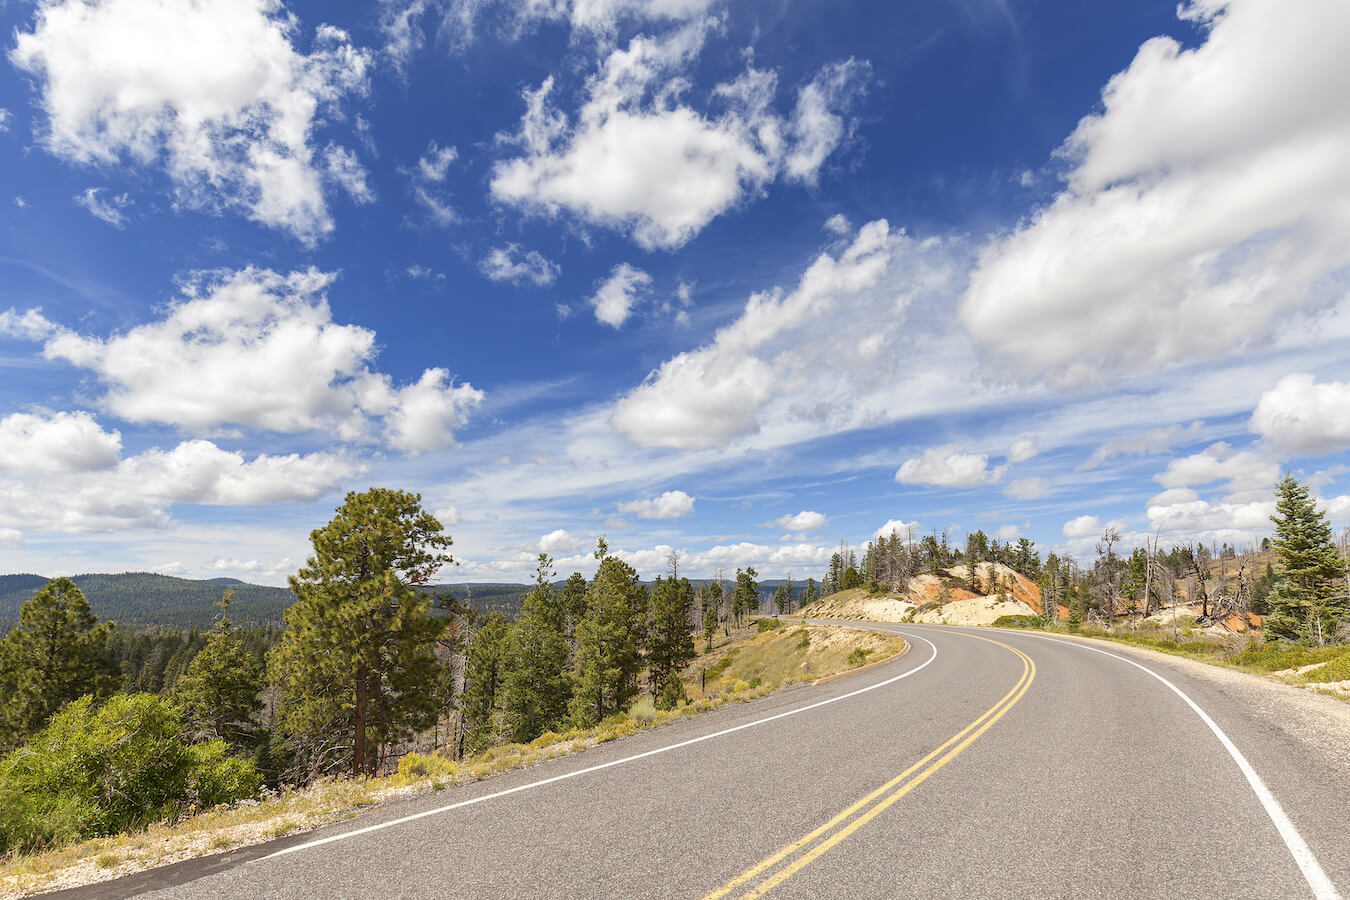 18-Mile Scenic Drive, Bryce Canyon National Park, Utah | Photo Credit: Shutterstock / Maciej Bledowski